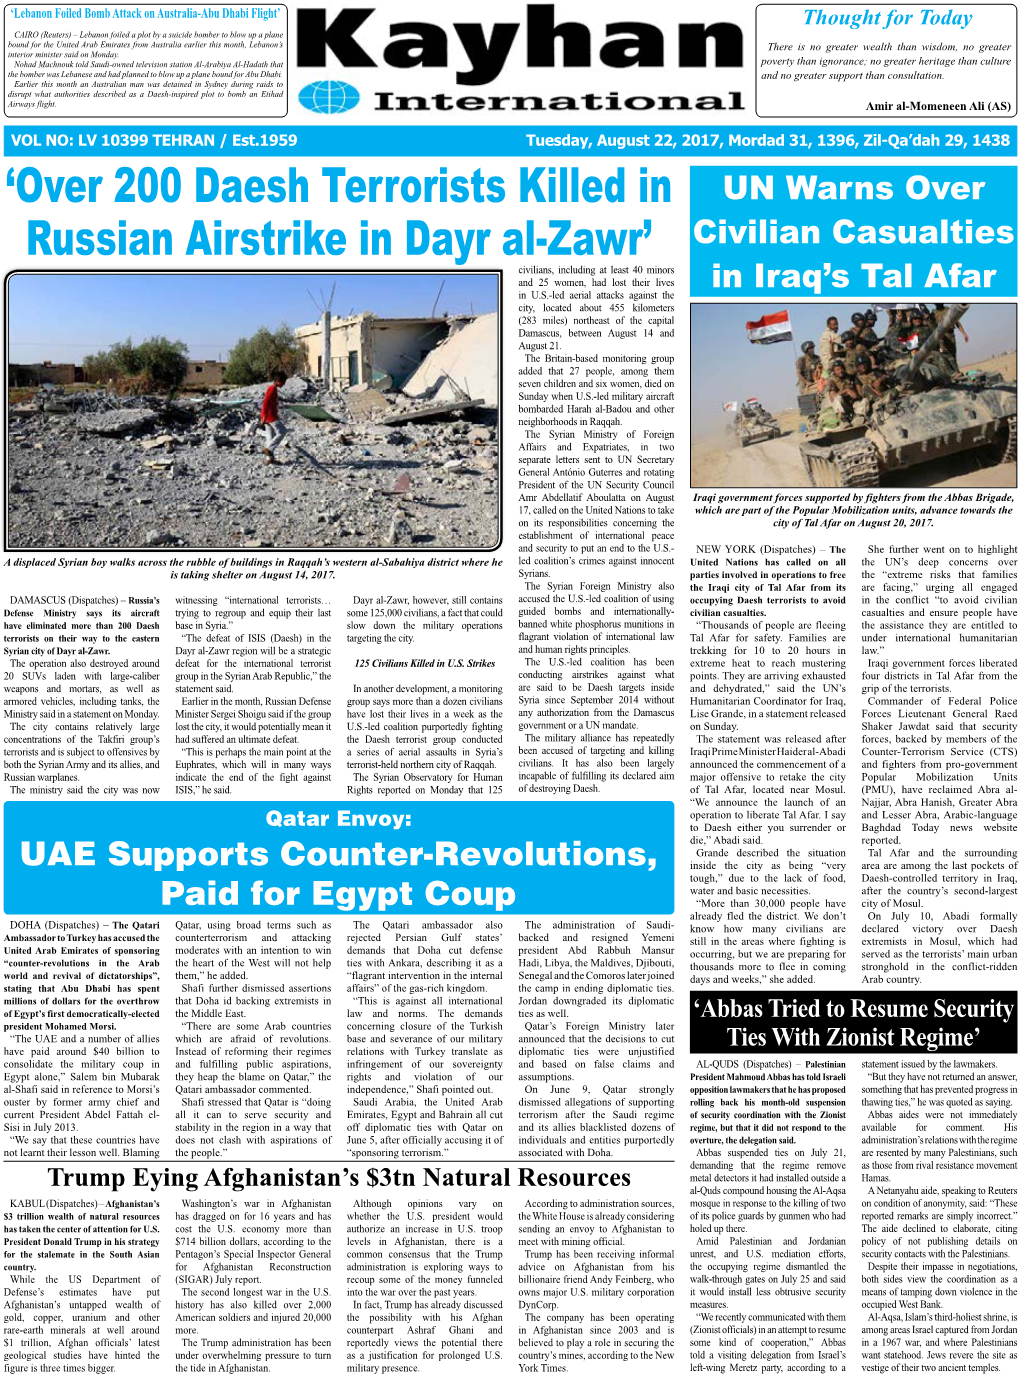 'Over 200 Daesh Terrorists Killed in Russian Airstrike in Dayr Al-Zawr'